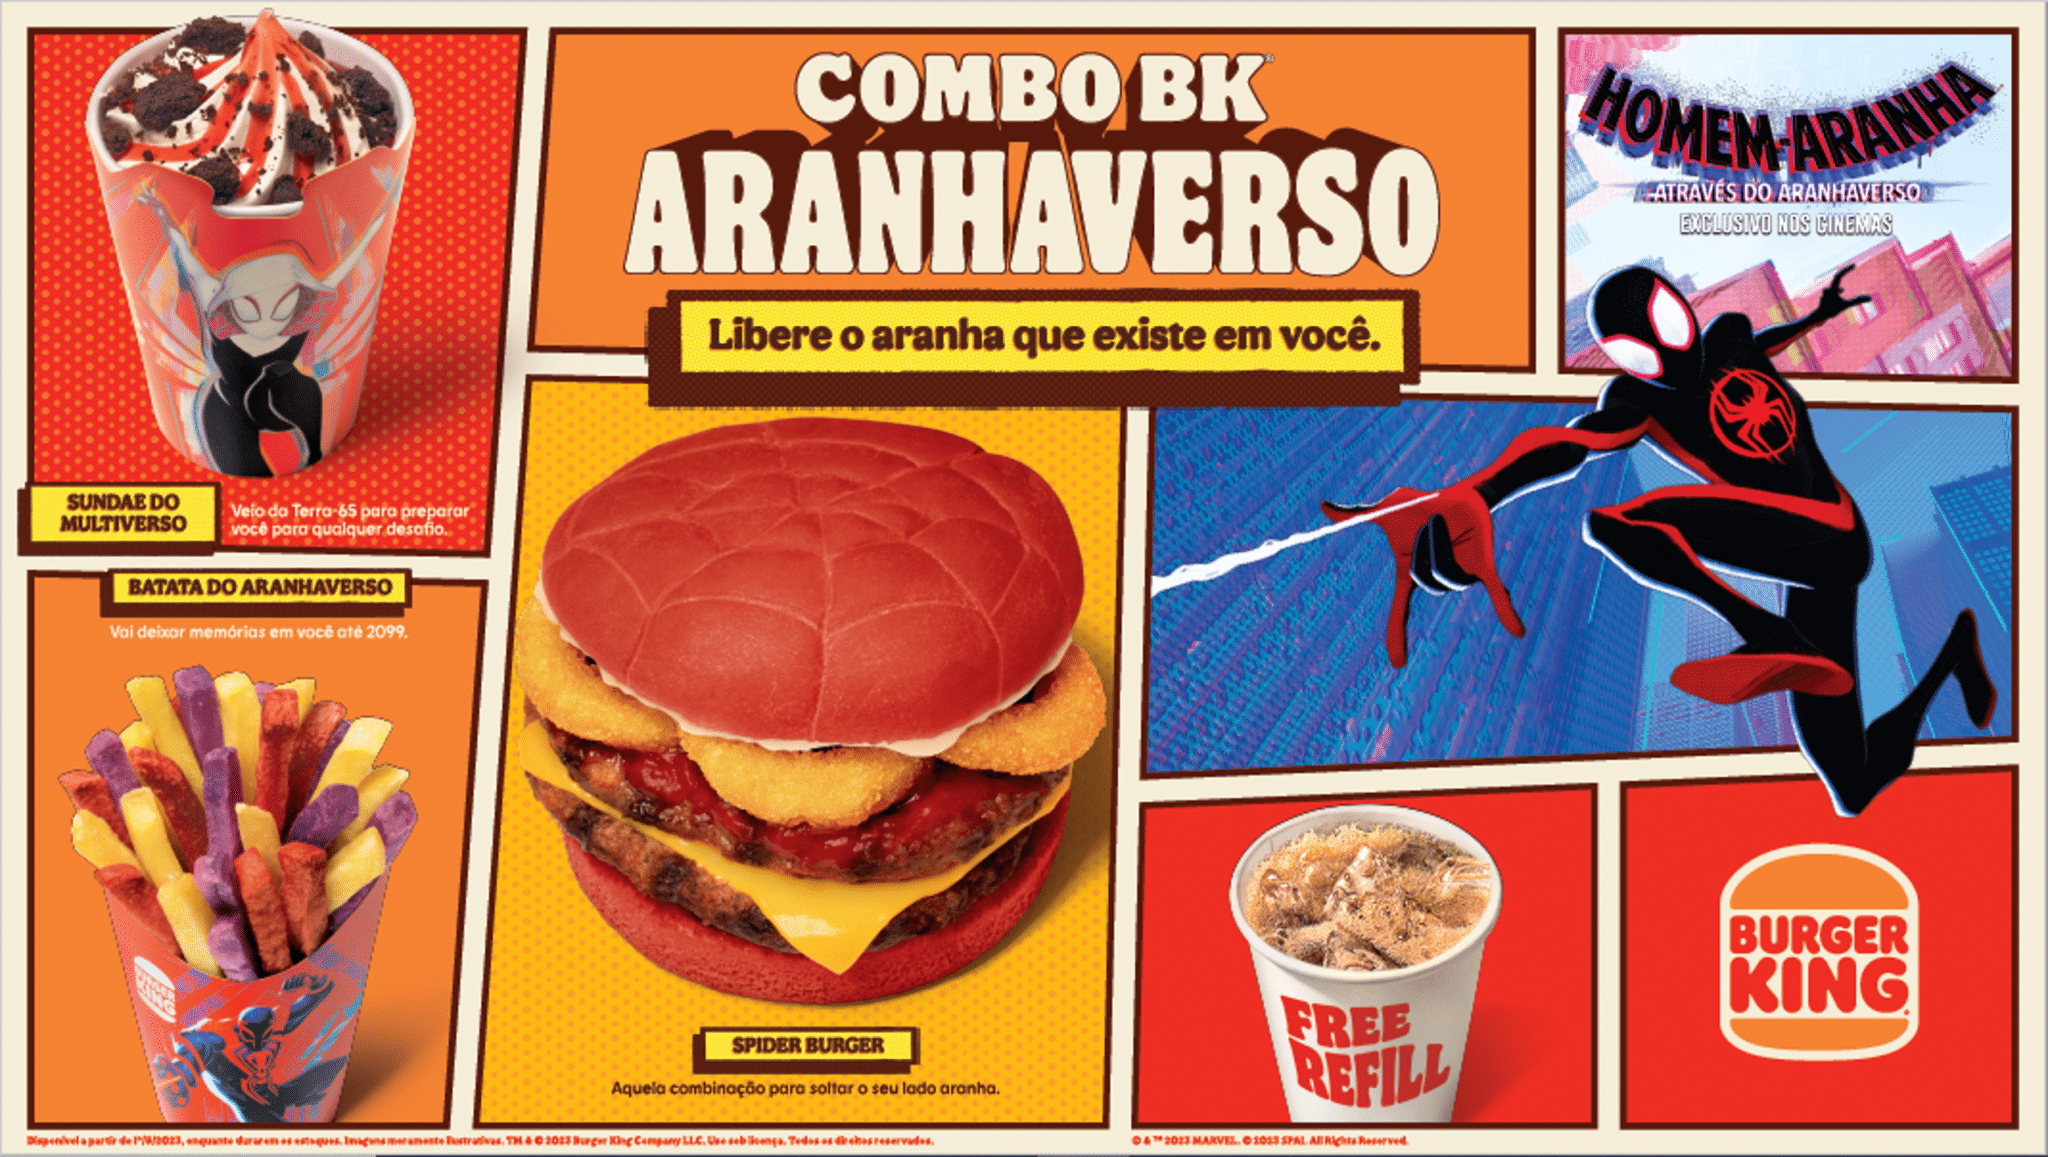 Burger King BR on X: já viu a nova oferta do BK? compre um combo